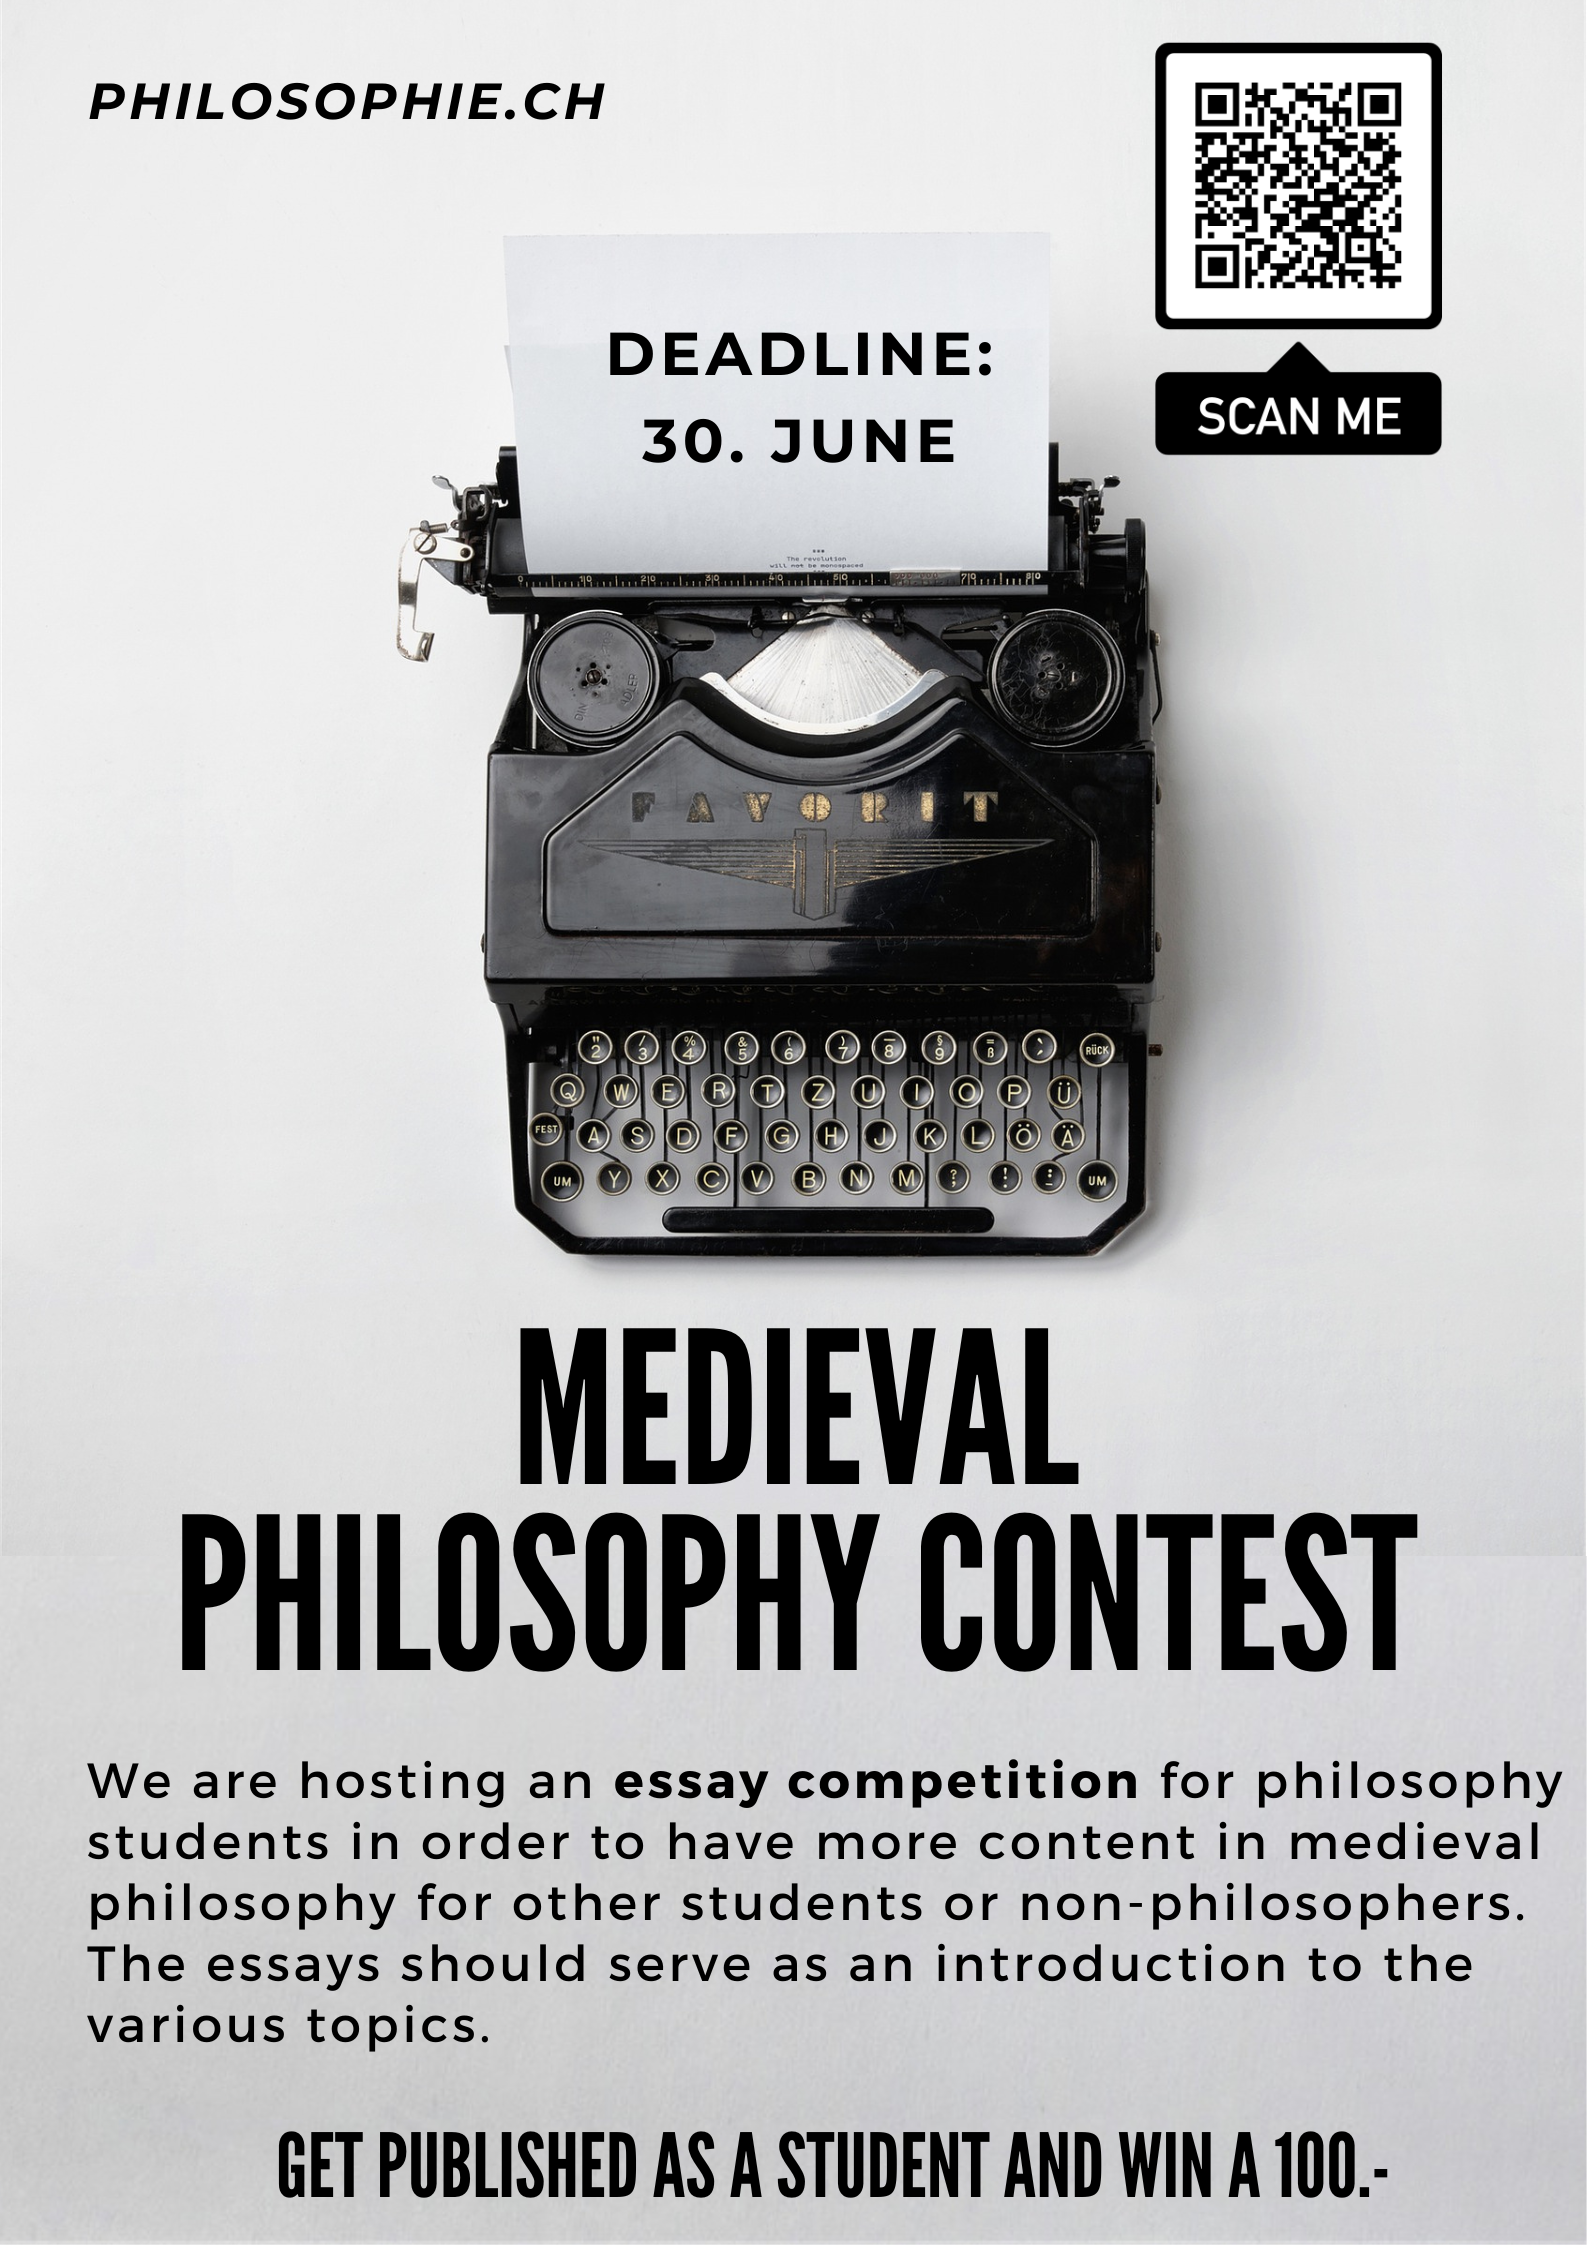 Medieval philosophy contest